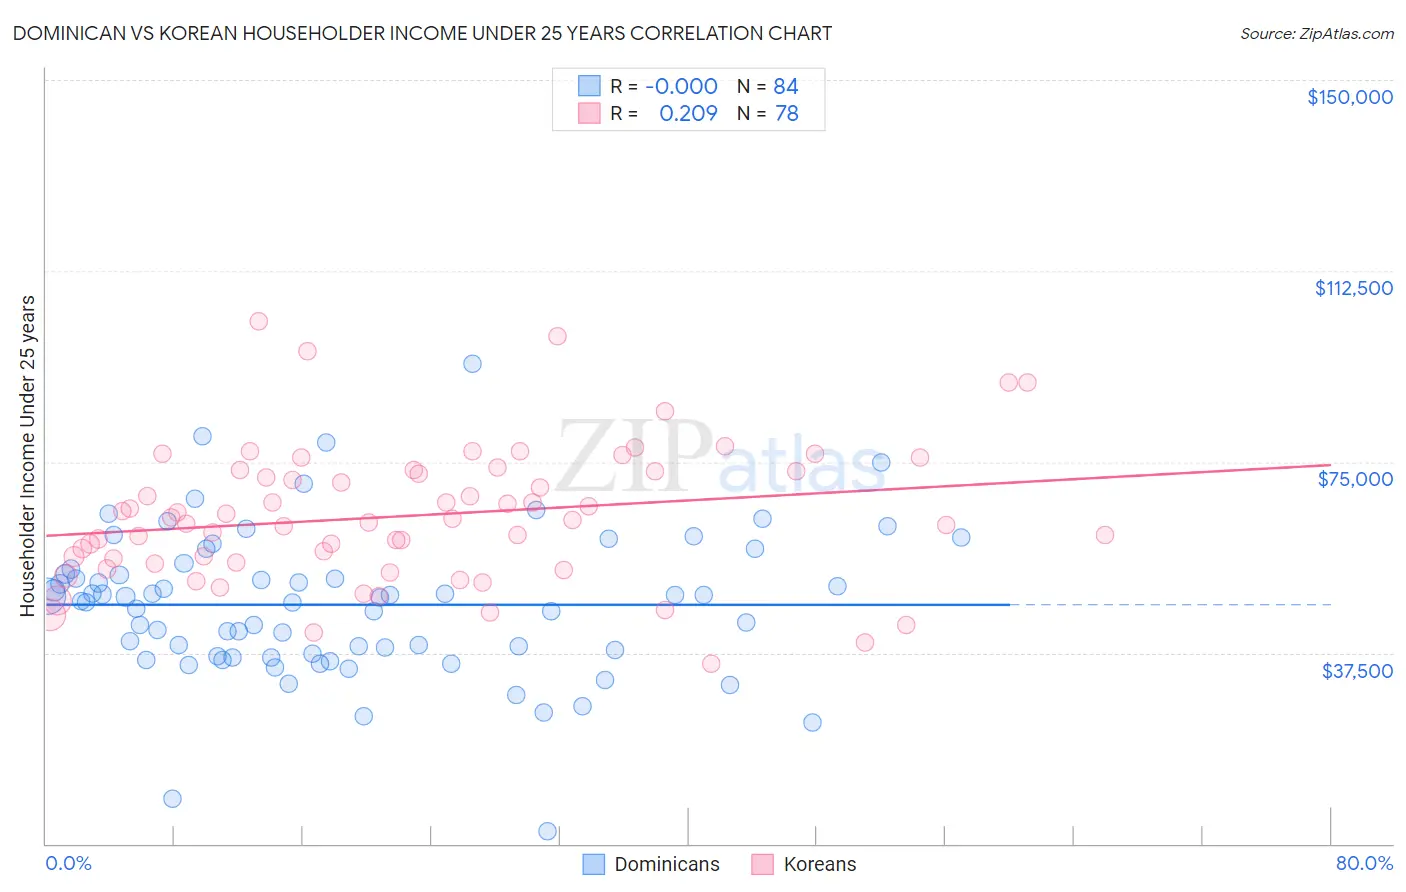 Dominican vs Korean Householder Income Under 25 years